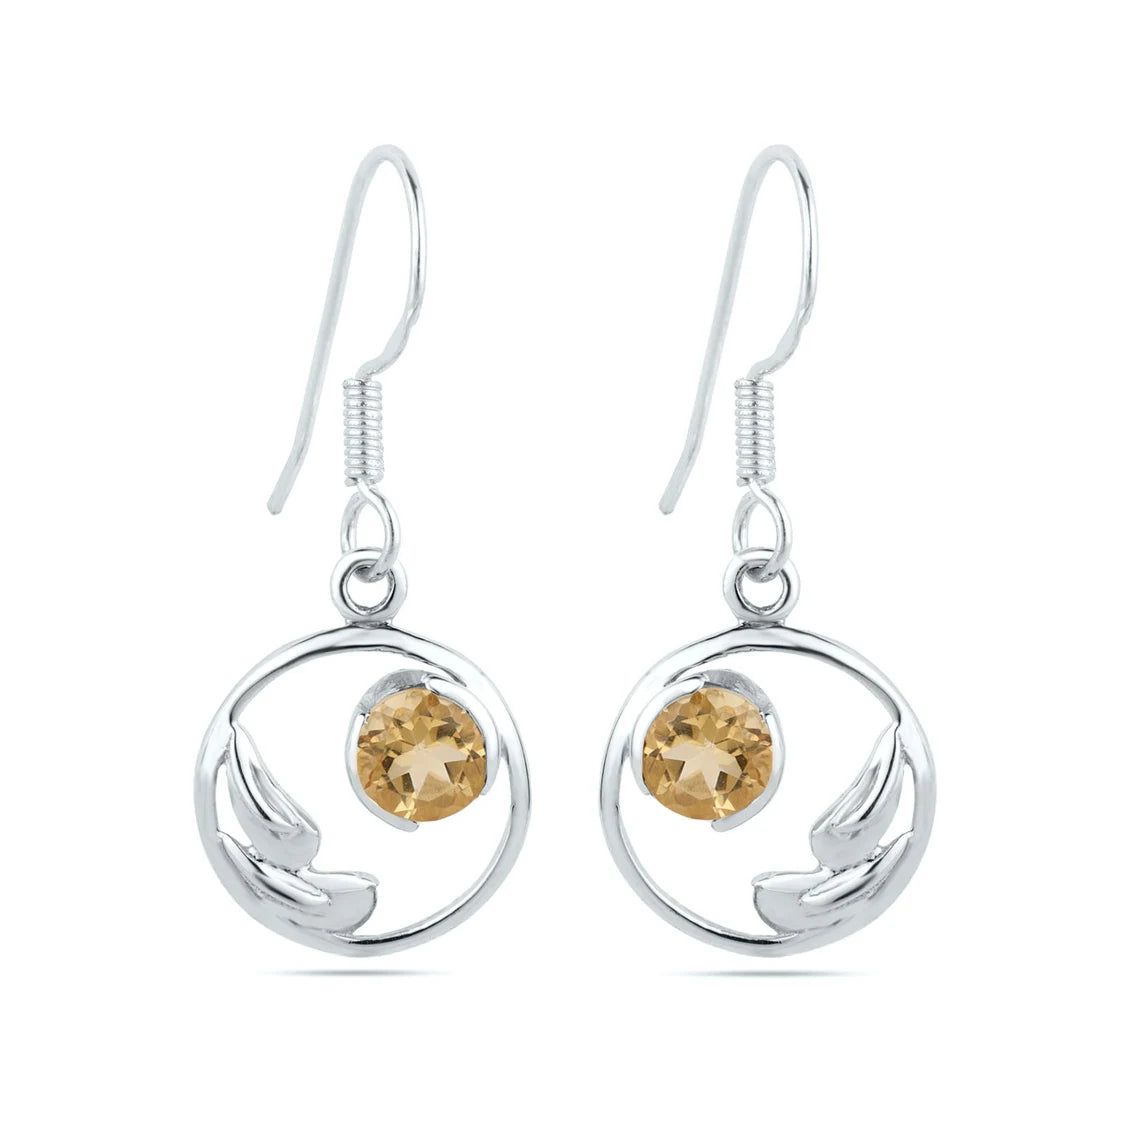 Citrine dangle earrings, Garnet earrings, iolite earrings, peridot earrings, citrine earrings, blue topaz earrings, 925 sterling silver